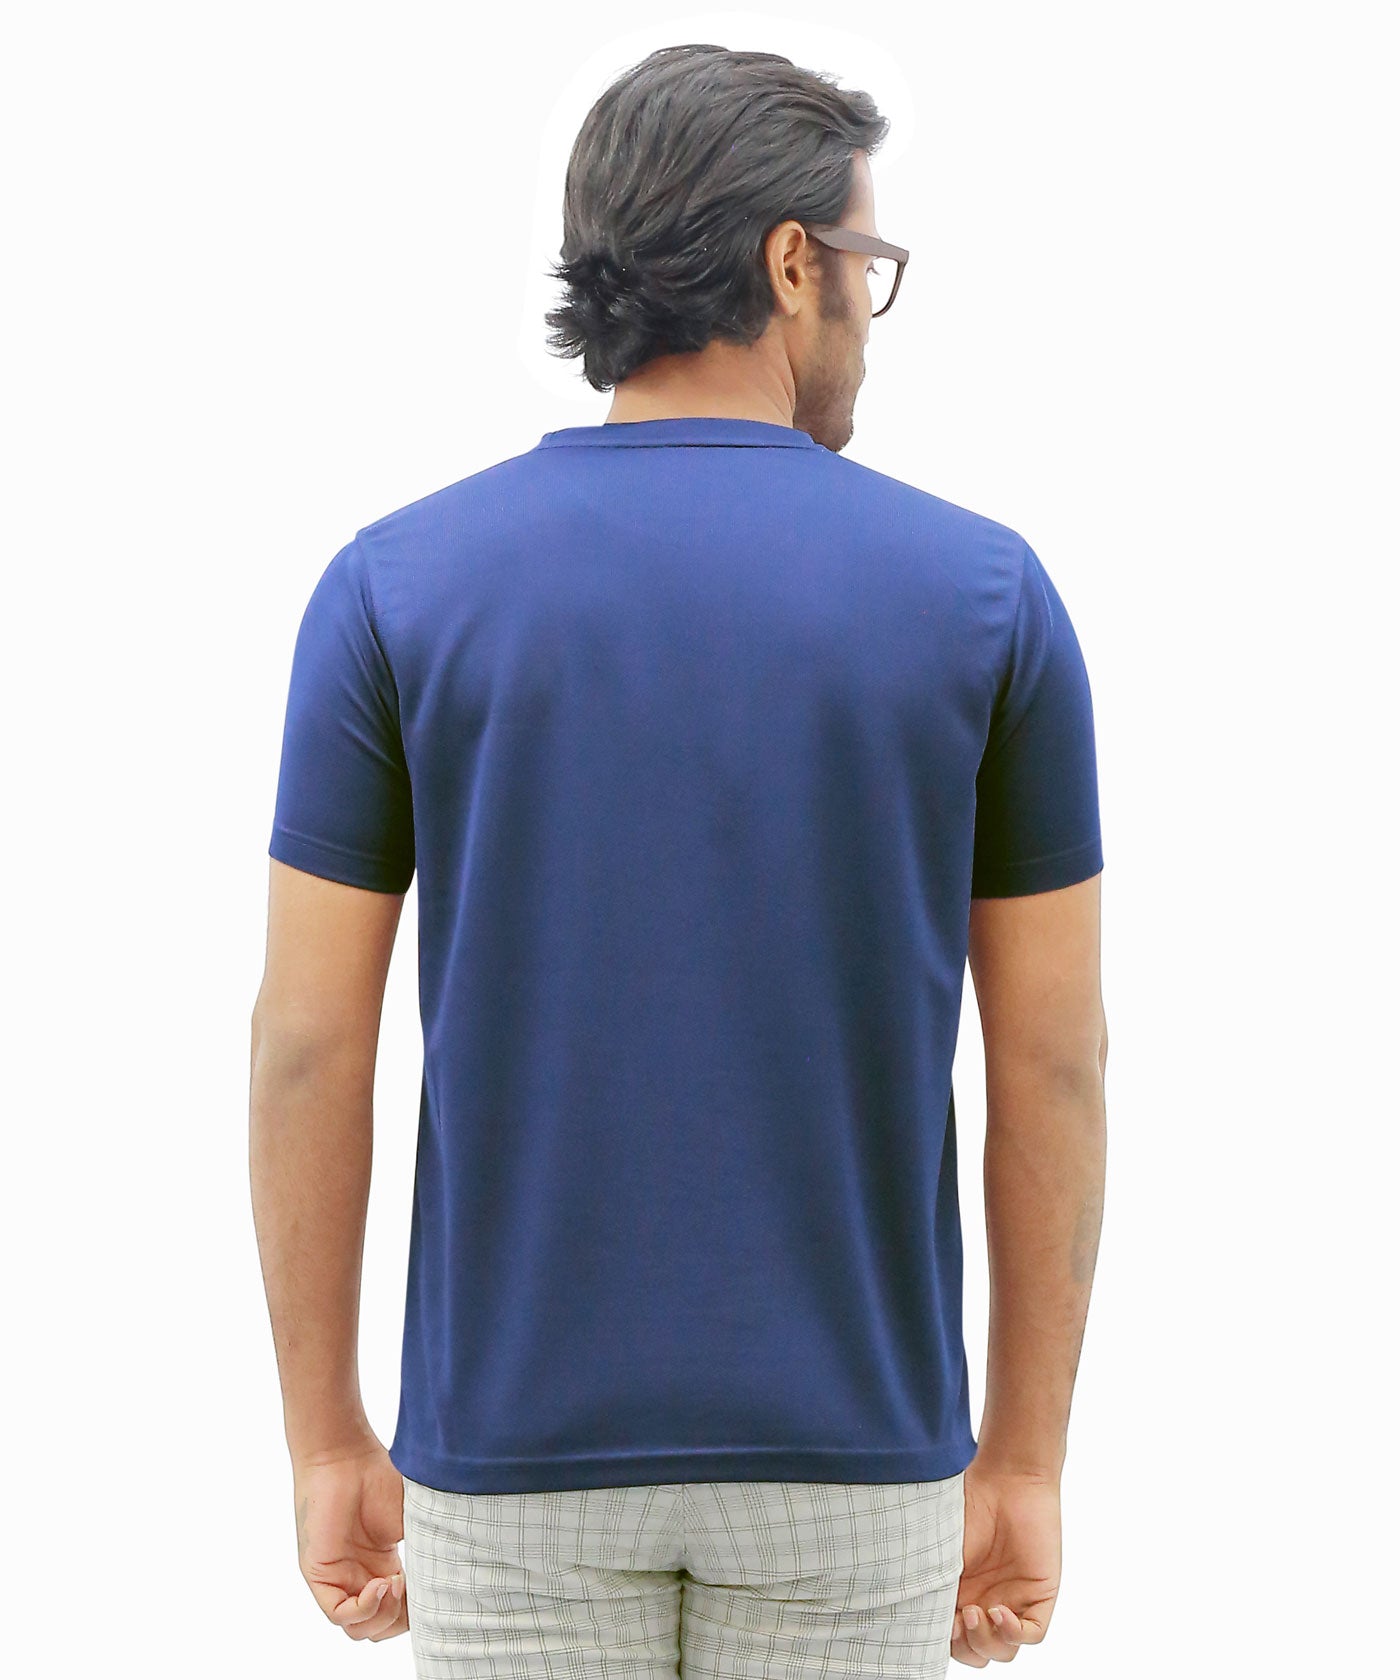 The Super Computer - Dryfit T-Shirt for Men - Navy Blue